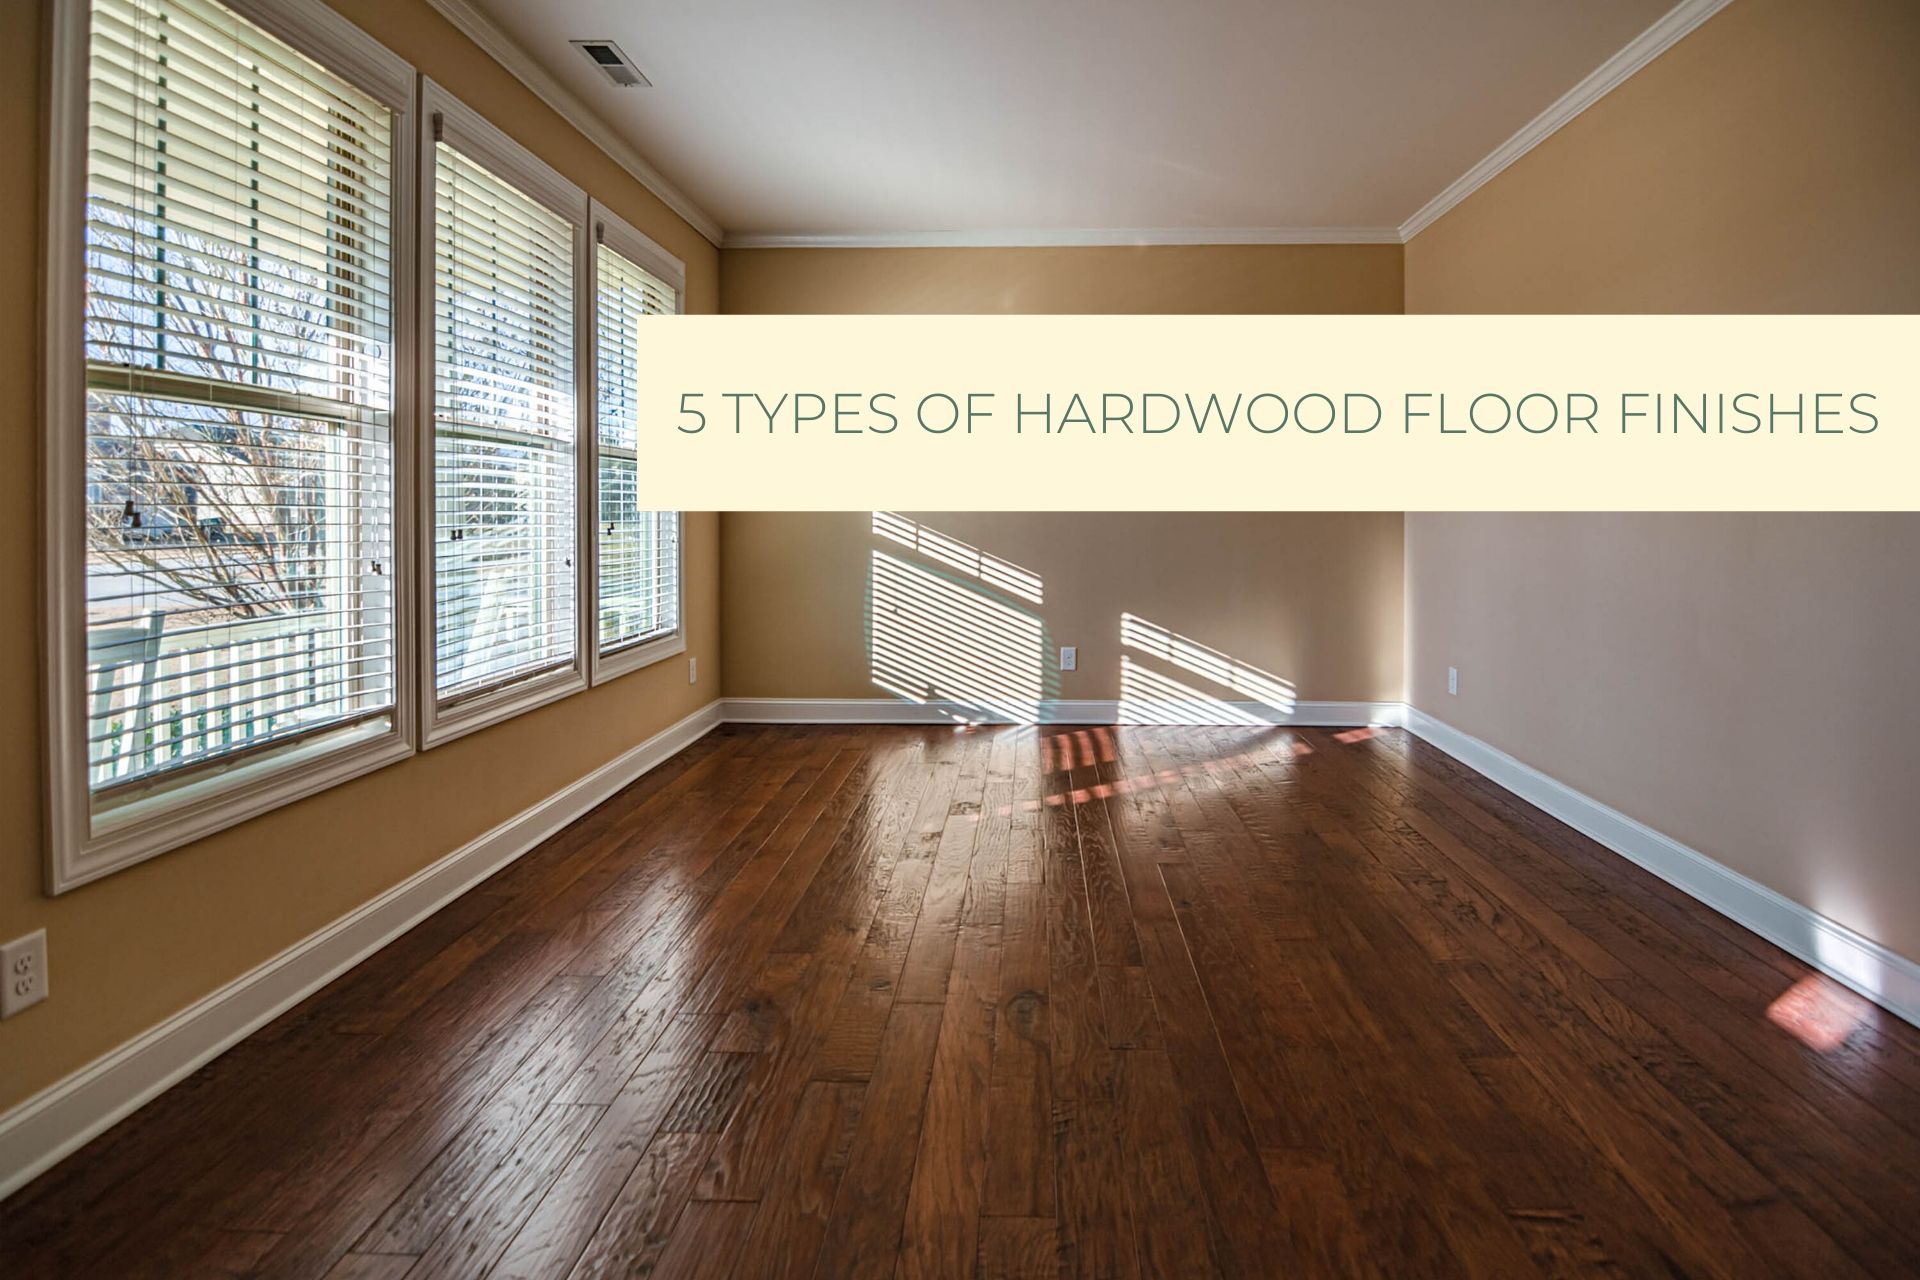 5 Types Of Wood Floor Finishes, Types Of Hardwood Floor Finishes